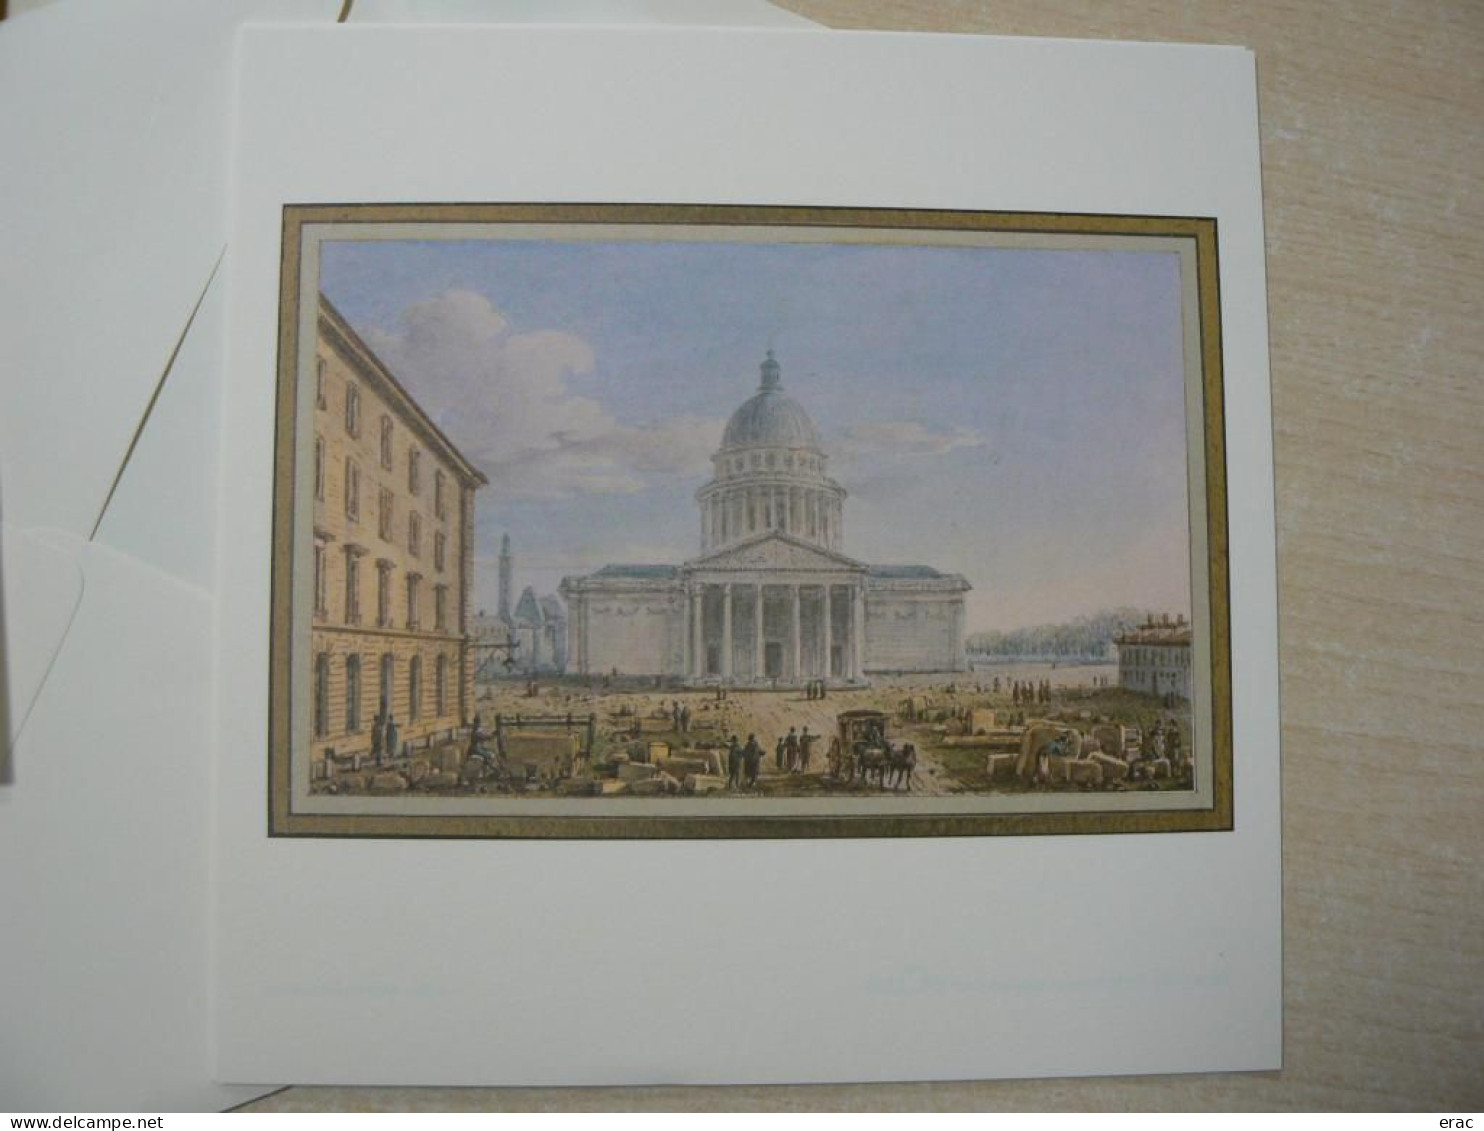 Reproductions de 12 aquarelles de Victor-Jean Nicolle - Enveloppe Napoléon - Peu courant